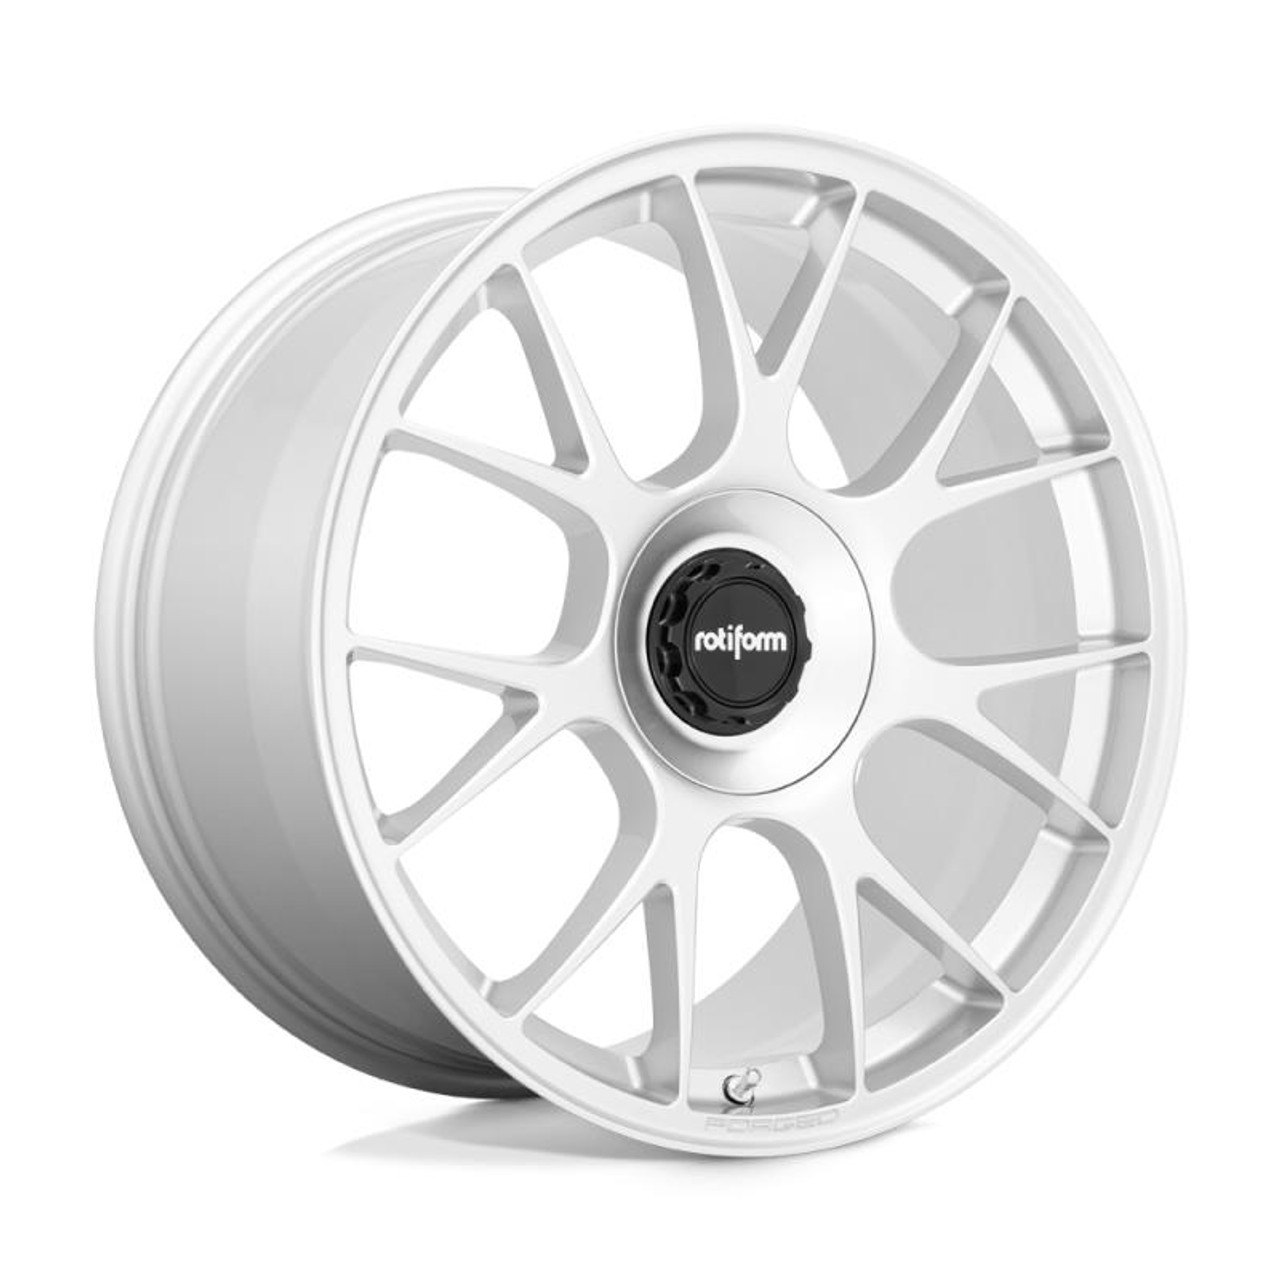  Rotiform R902 TUF Wheel 19x10.5 5x120 34 Offset - Gloss Silver - R902190521+34T 